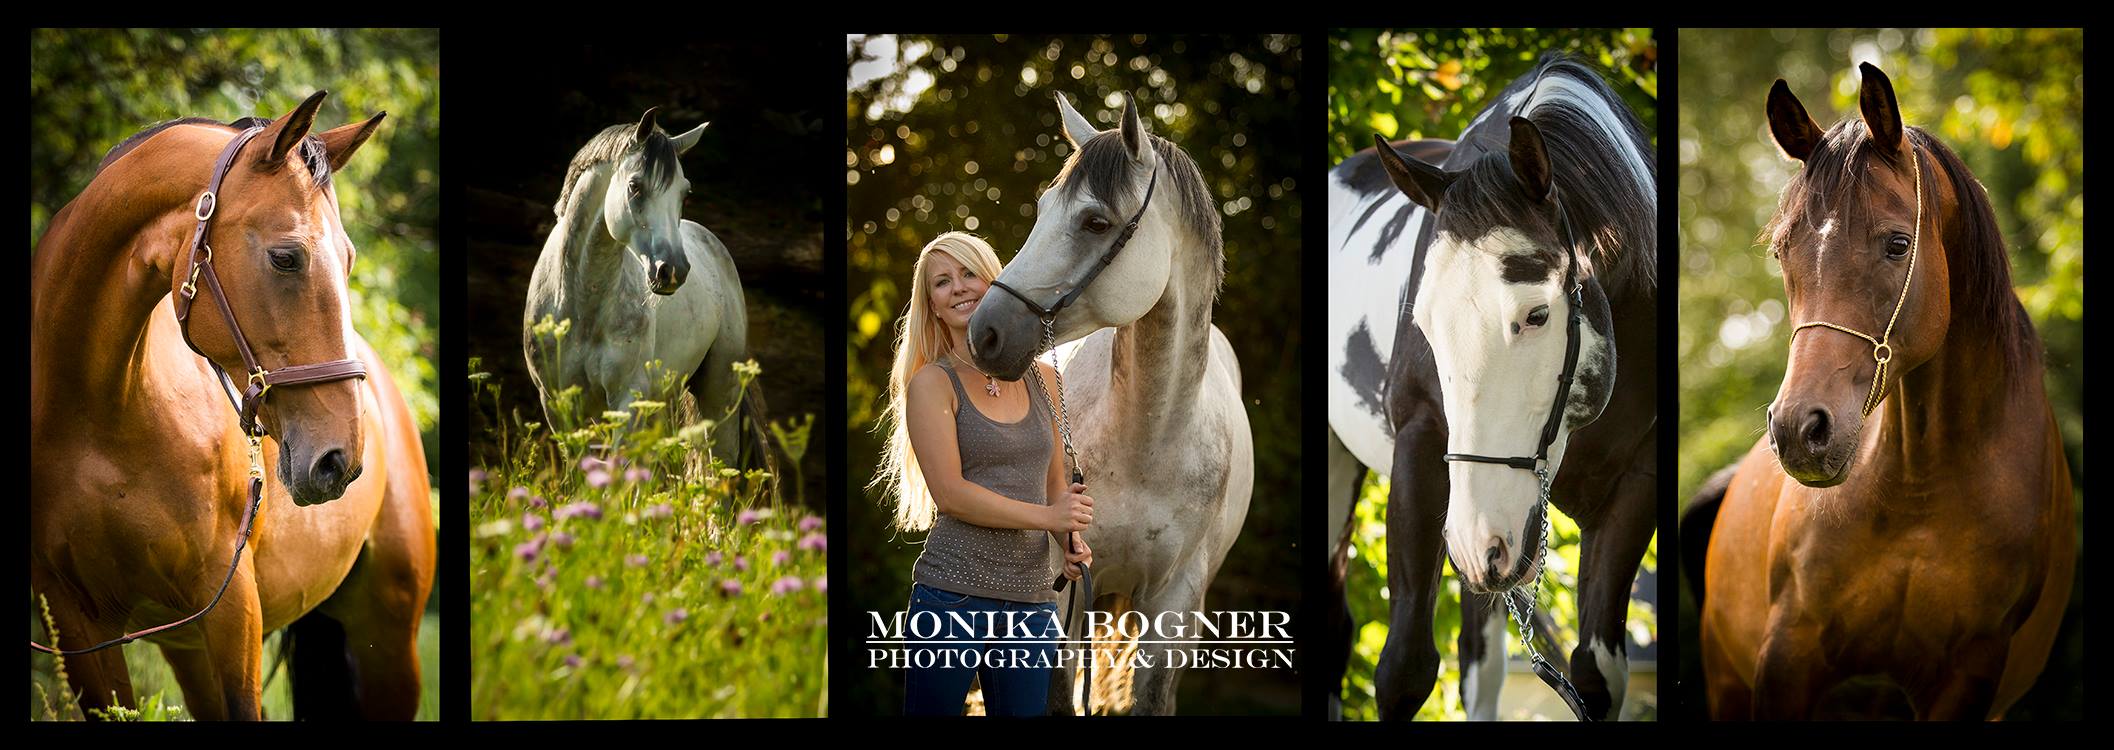 Monika Bogner Photography & Design